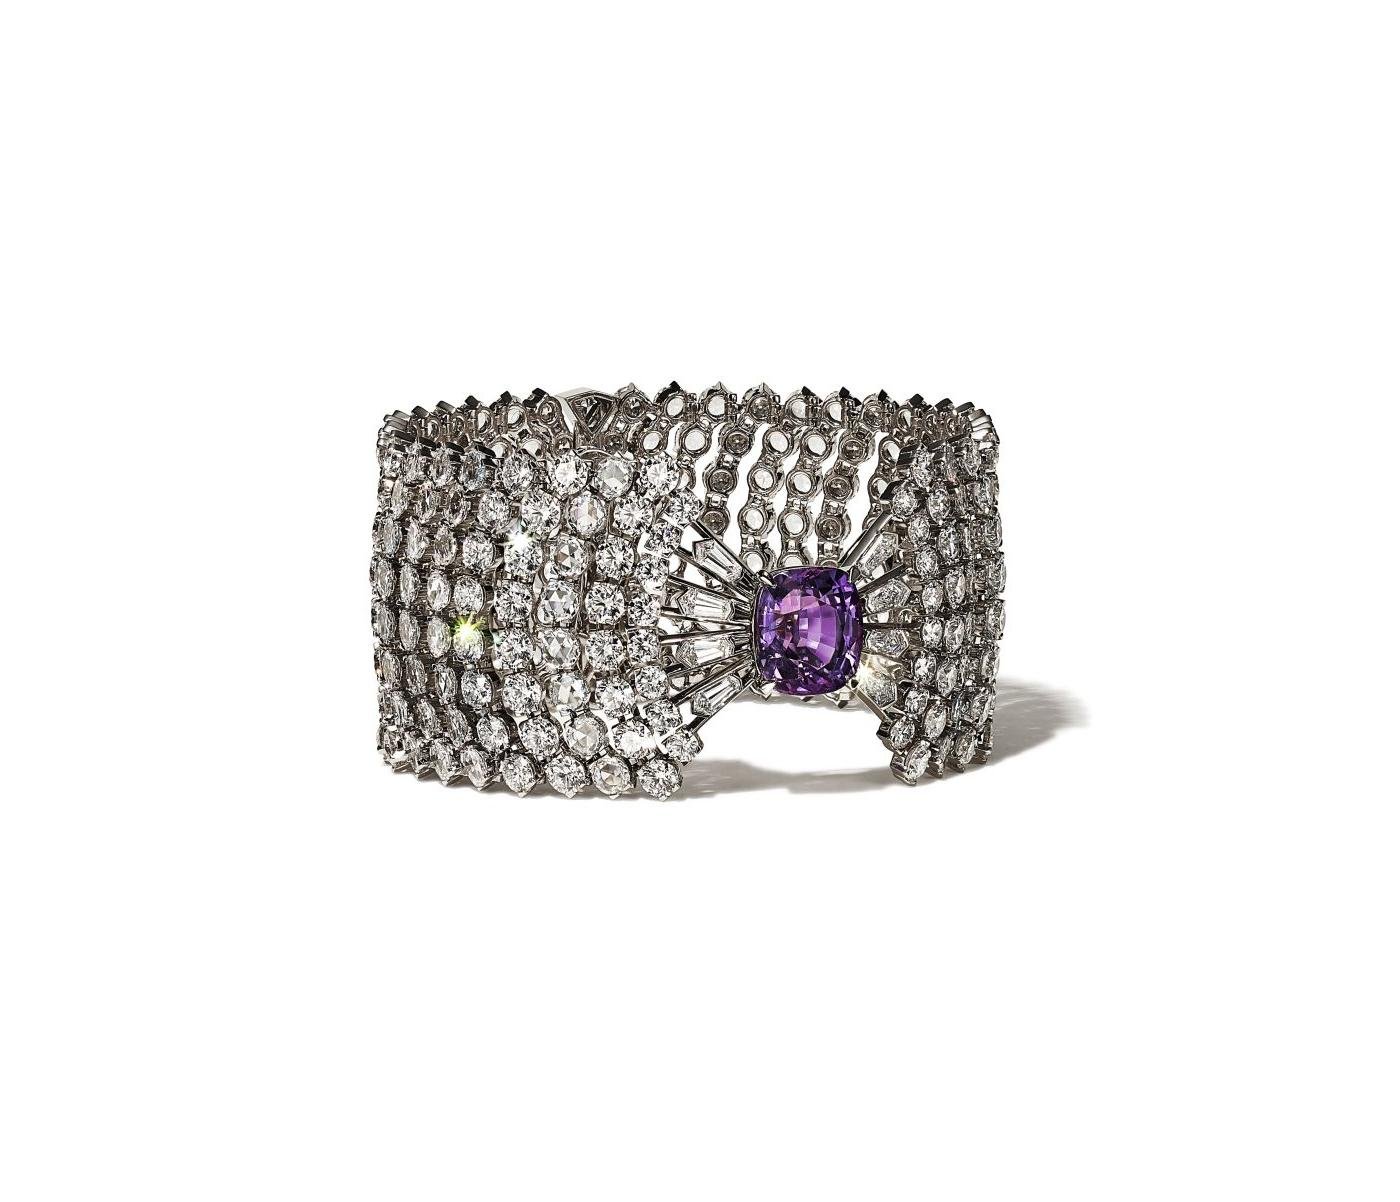 Bracelet by Tiffany & Co